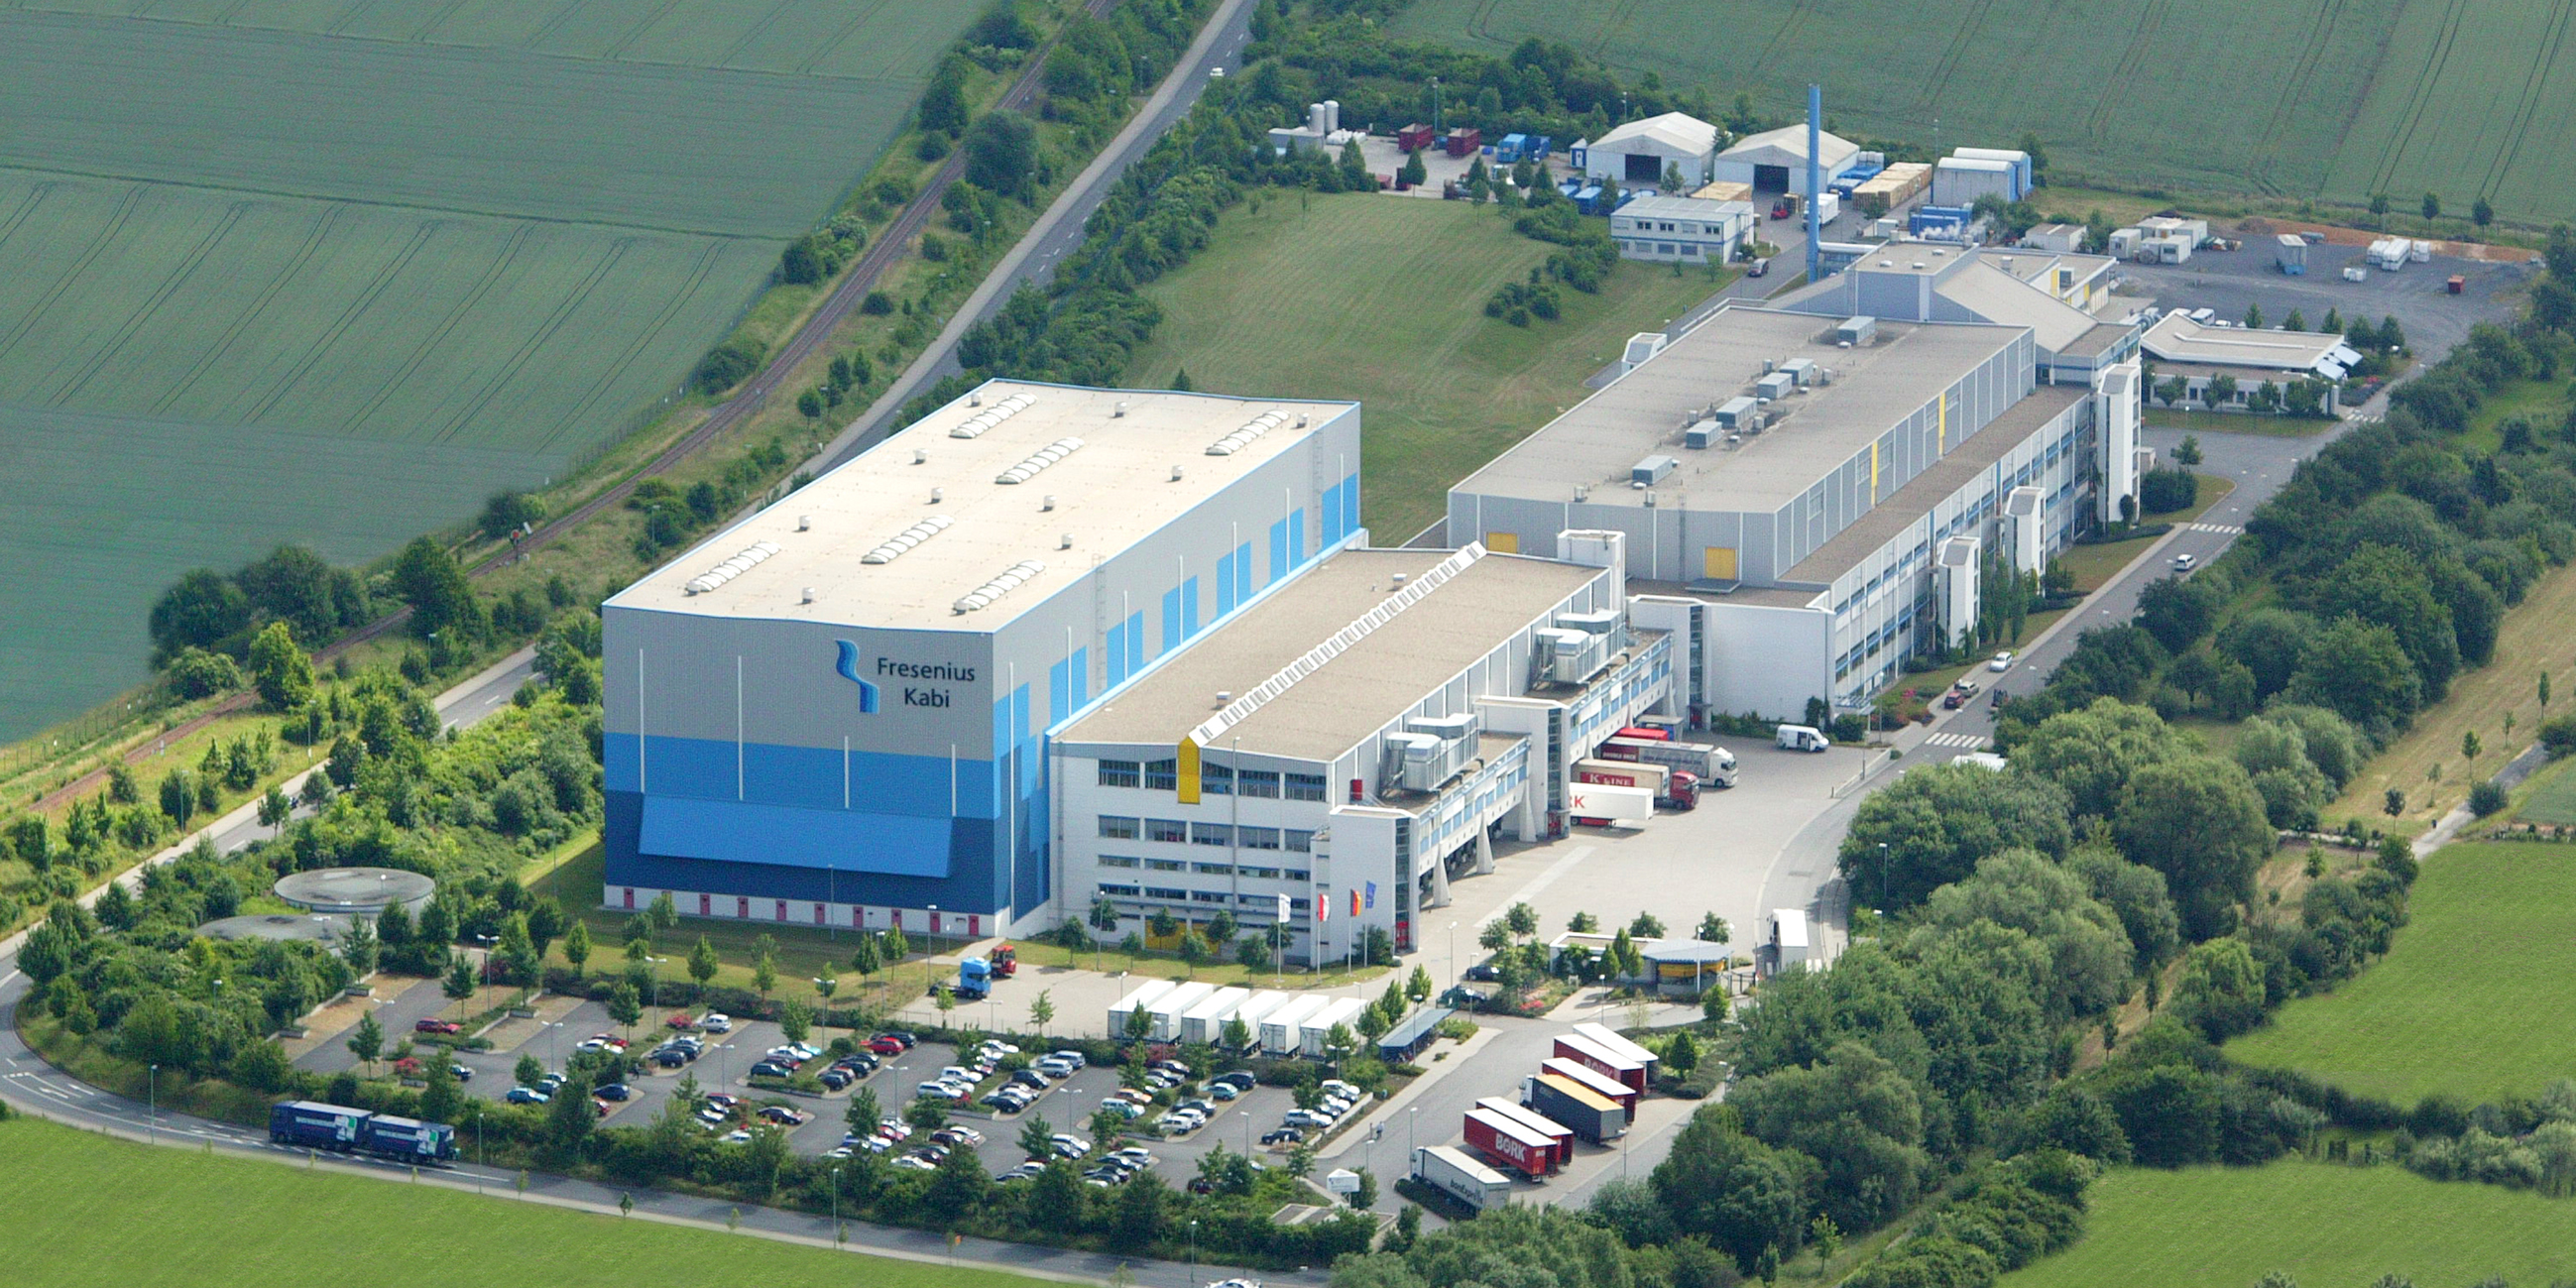 Fresenius Kabi manufacturing site in Friedberg, Germany